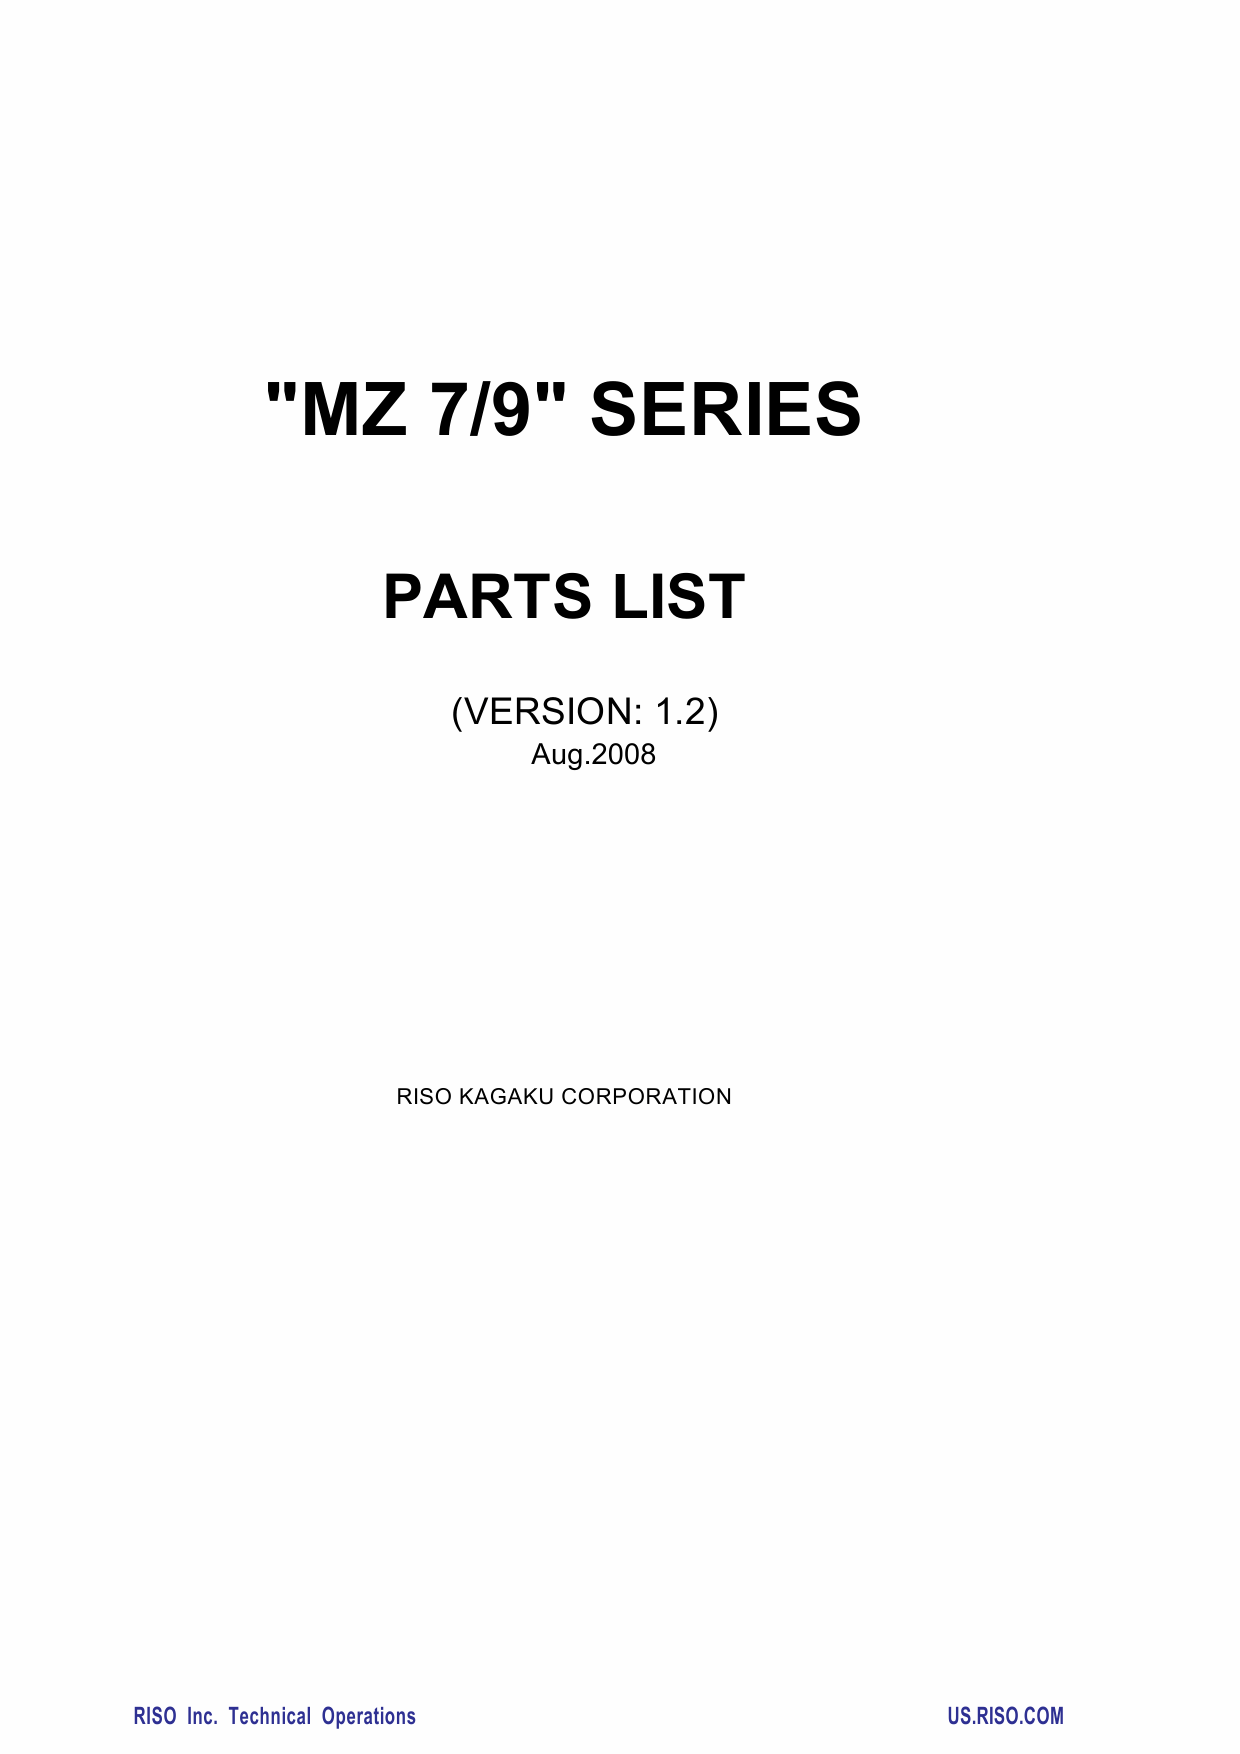 RISO MZ 770 790 MV-7690 Parts List Manual-1